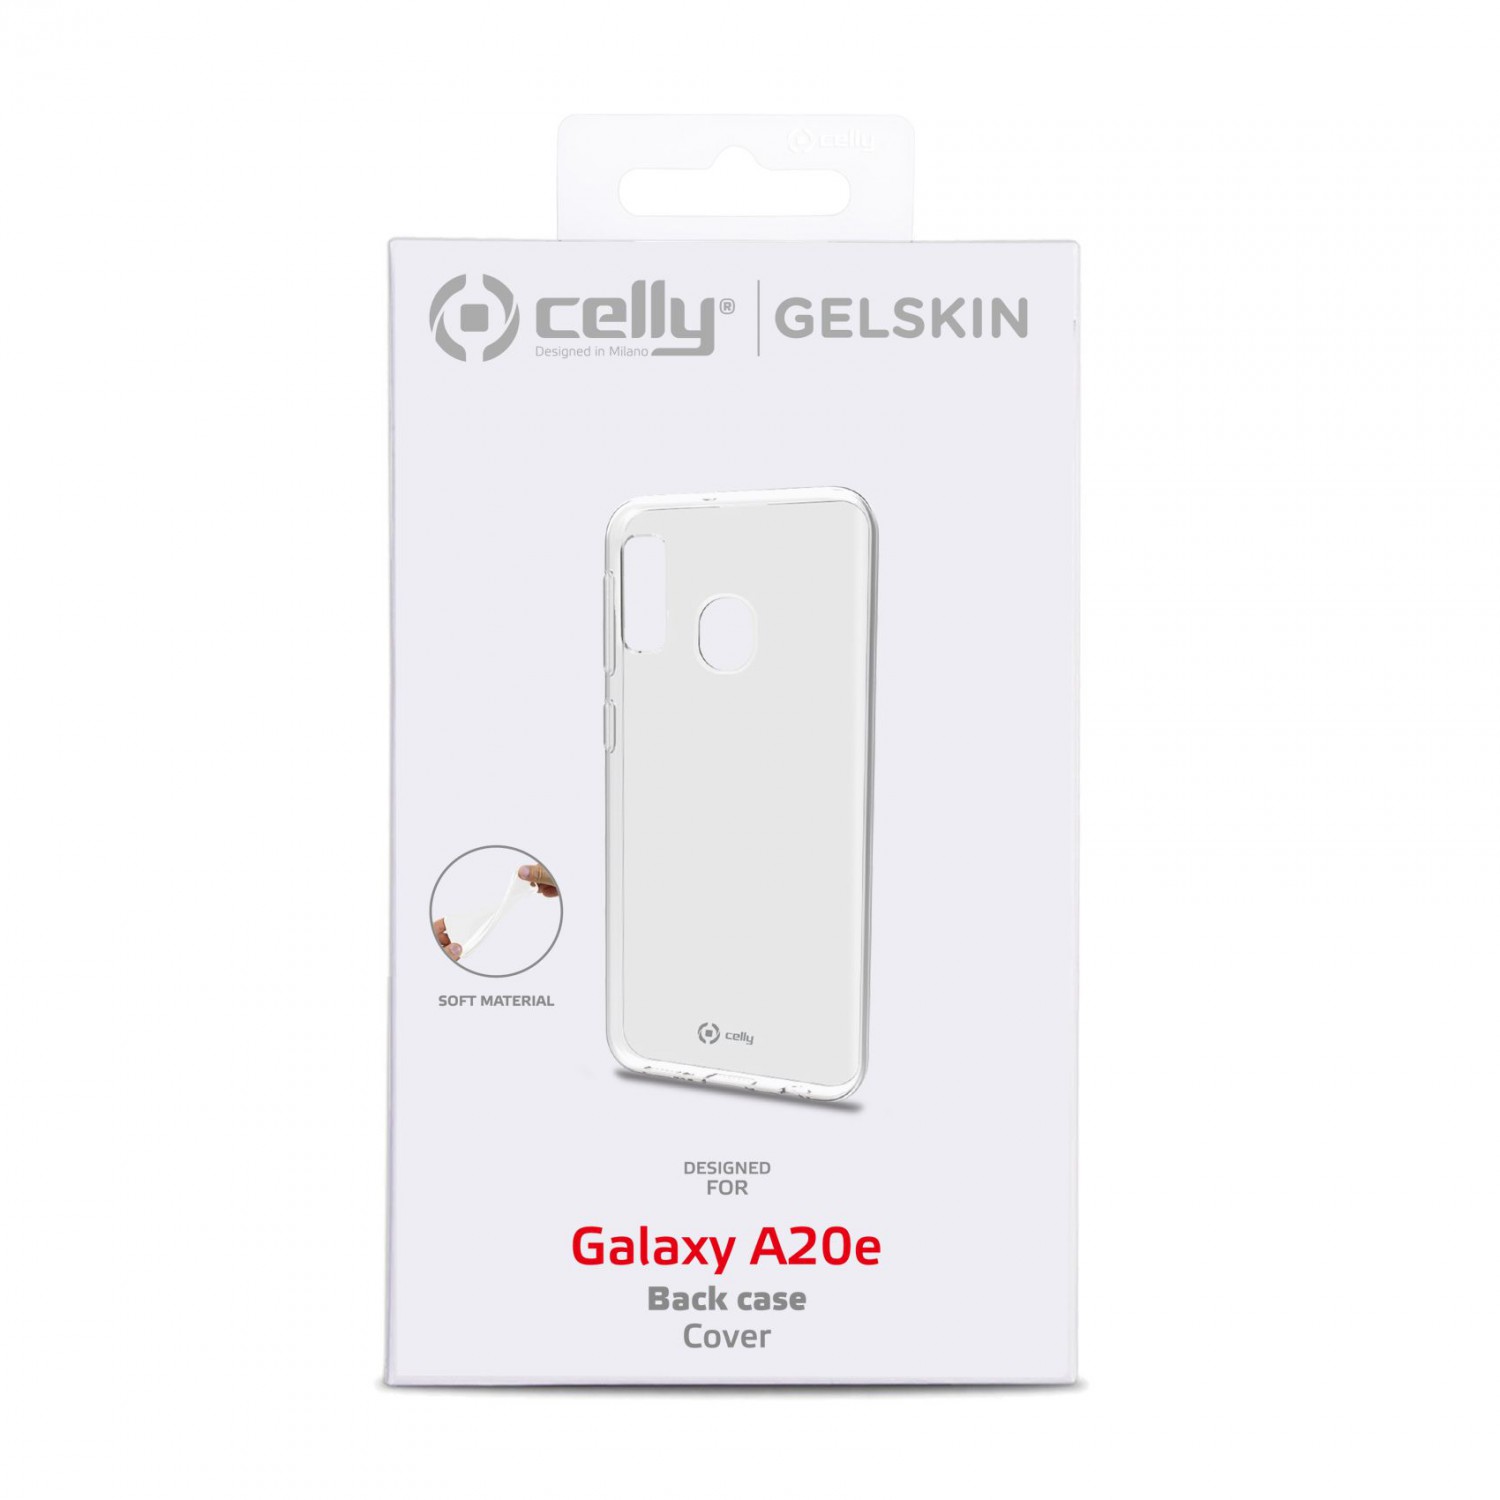 Silikonové pouzdro CELLY Gelskin pro Samsung Galaxy A20e, bezbarvé